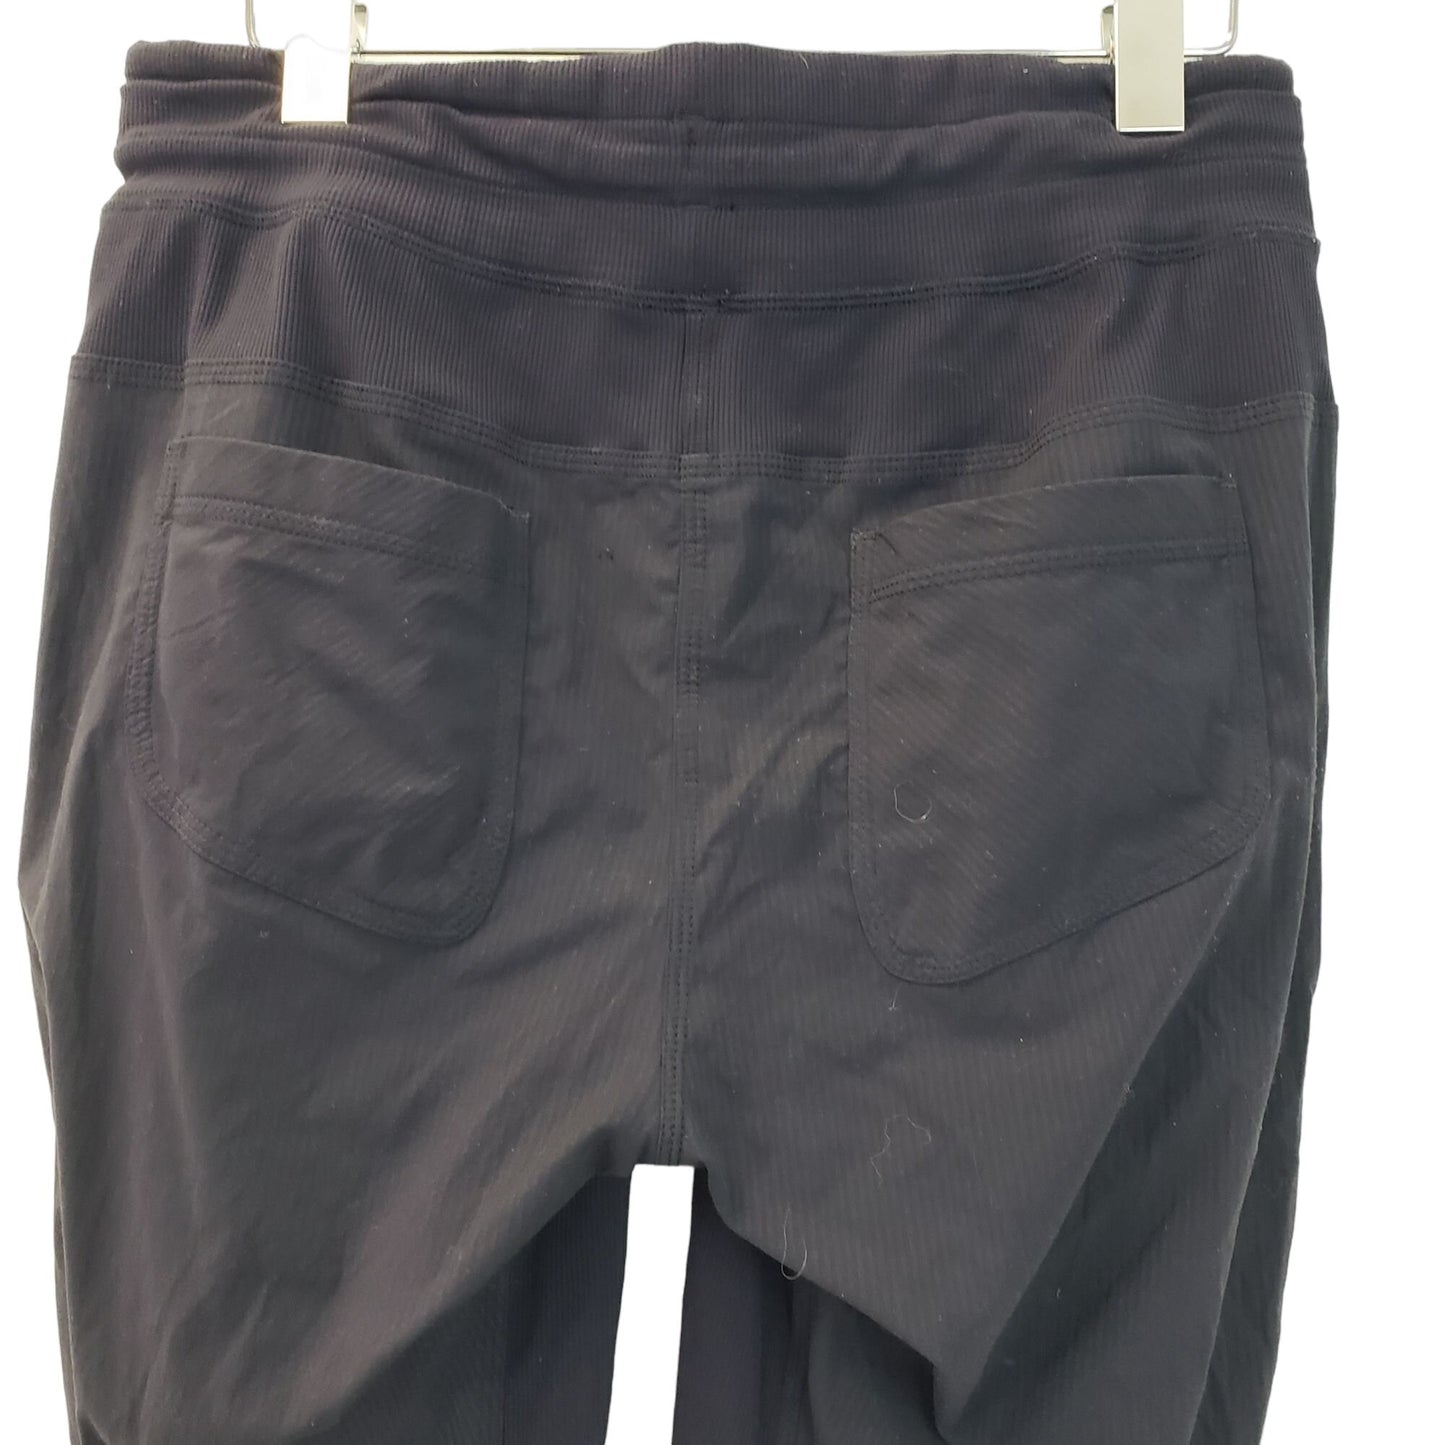 Lululemon Black Micro Striped Track Pants with Pockets Size 6